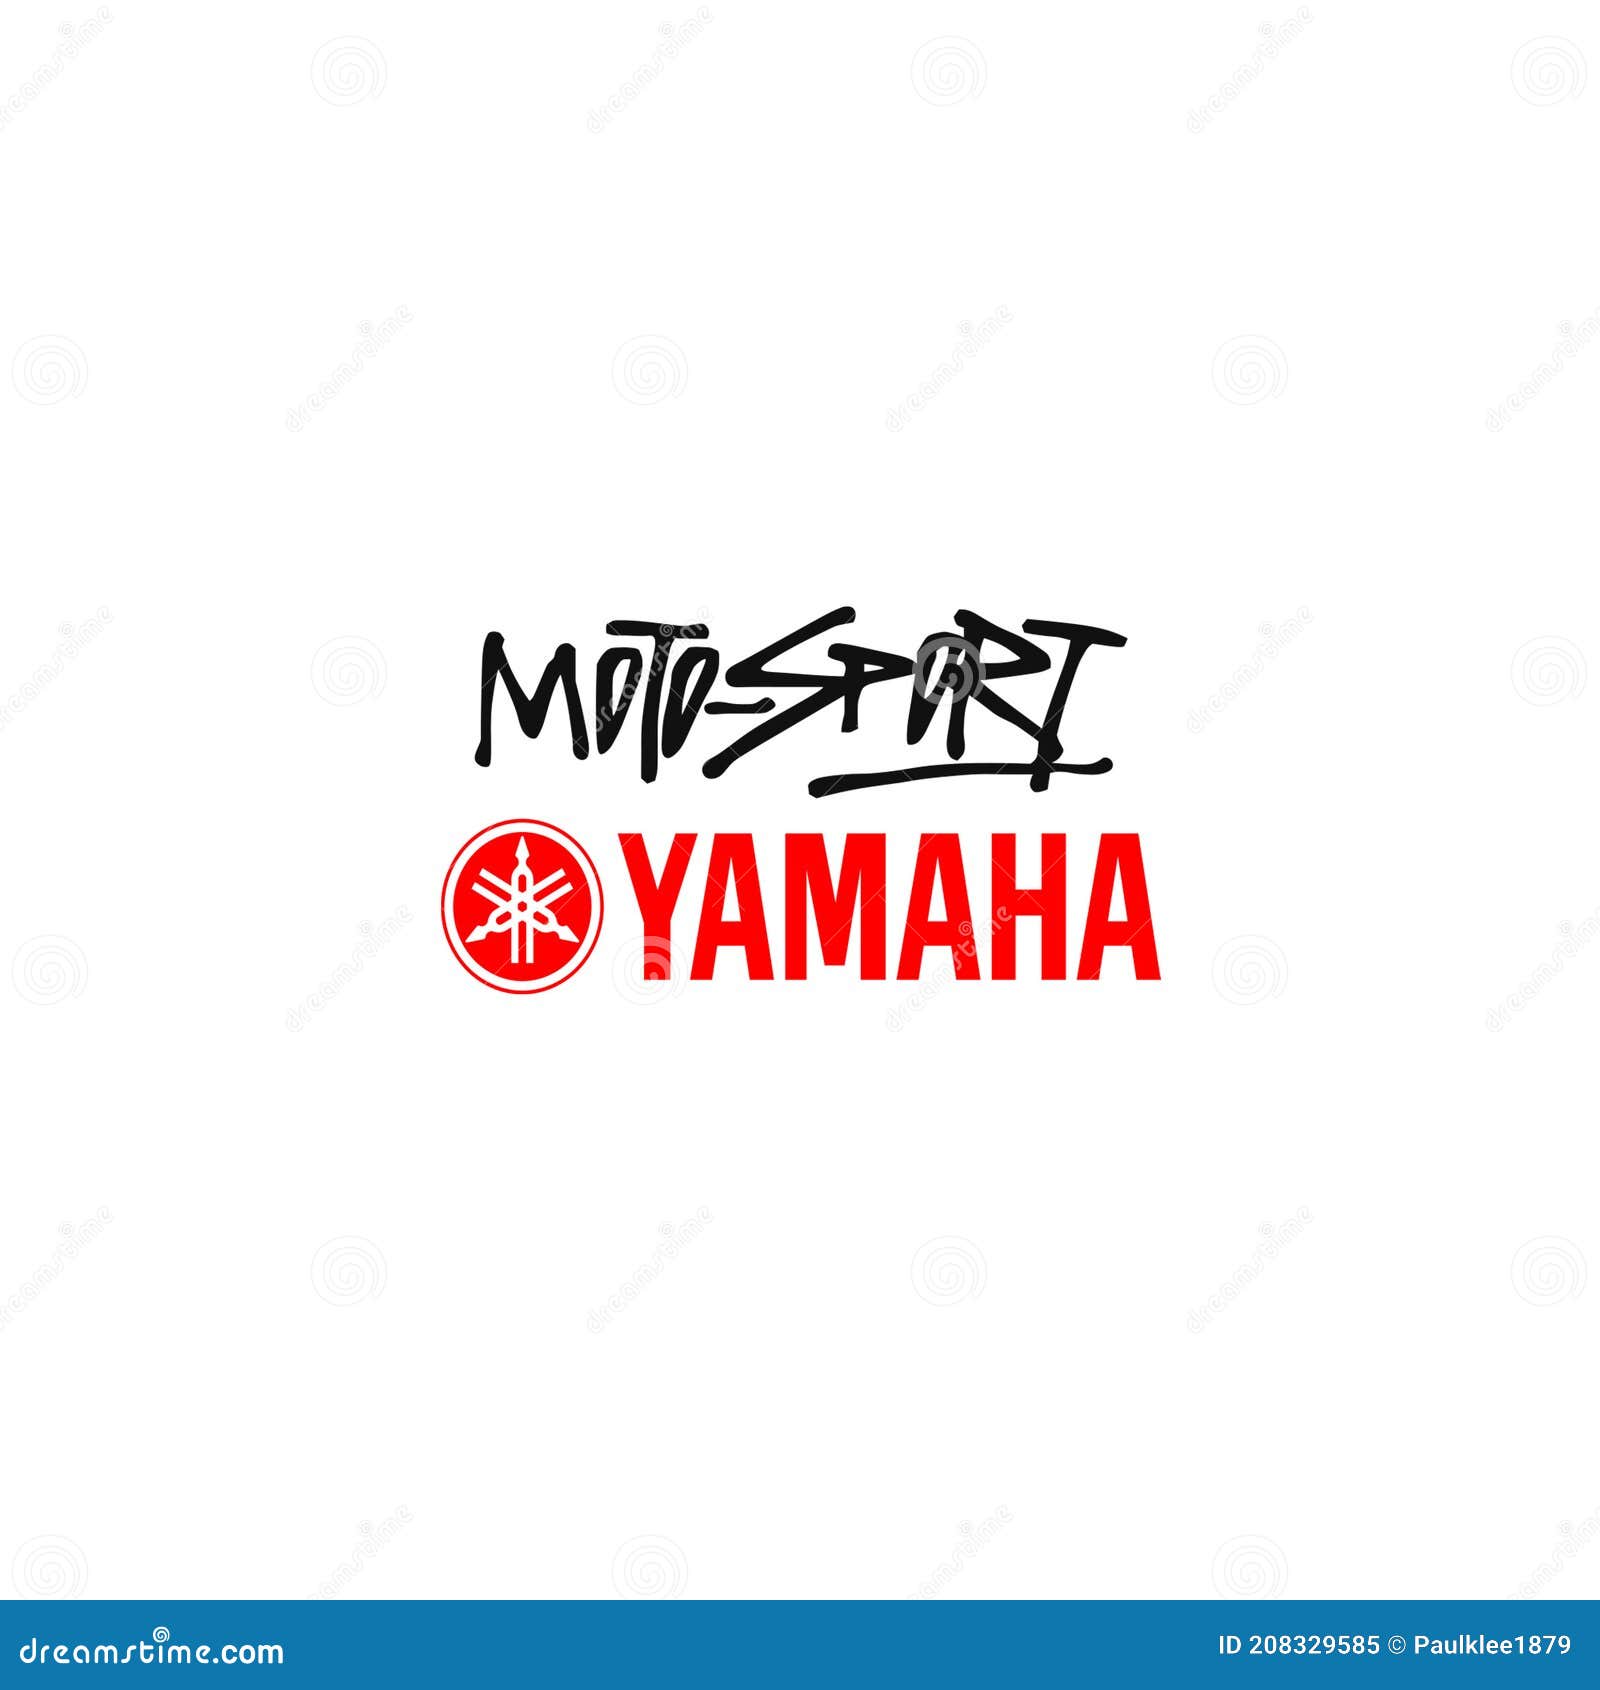 1,599 Yamaha Logo Images, Stock Photos, 3D objects, & Vectors | Shutterstock